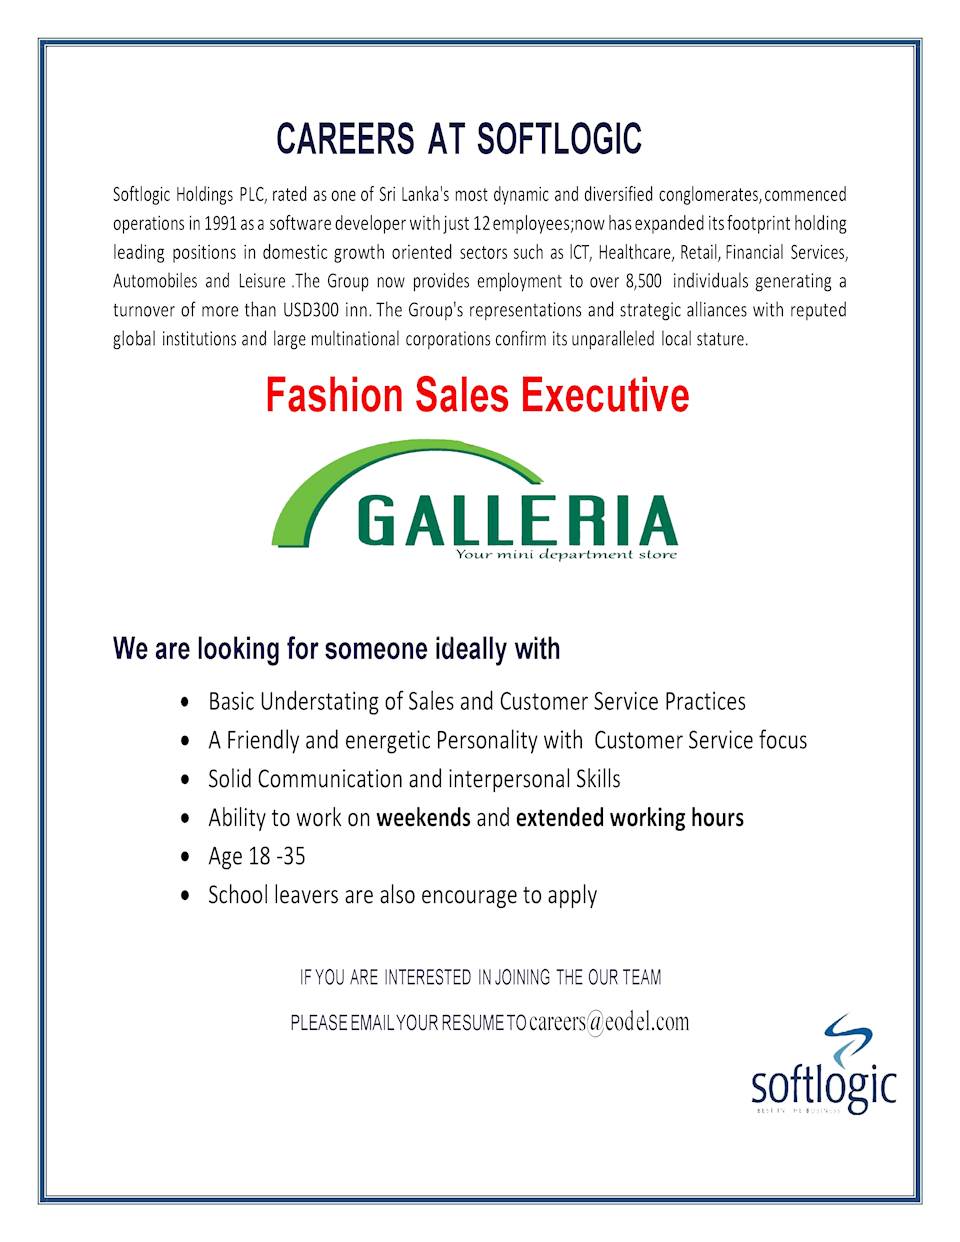 Fashion Sales Executive - Galleria